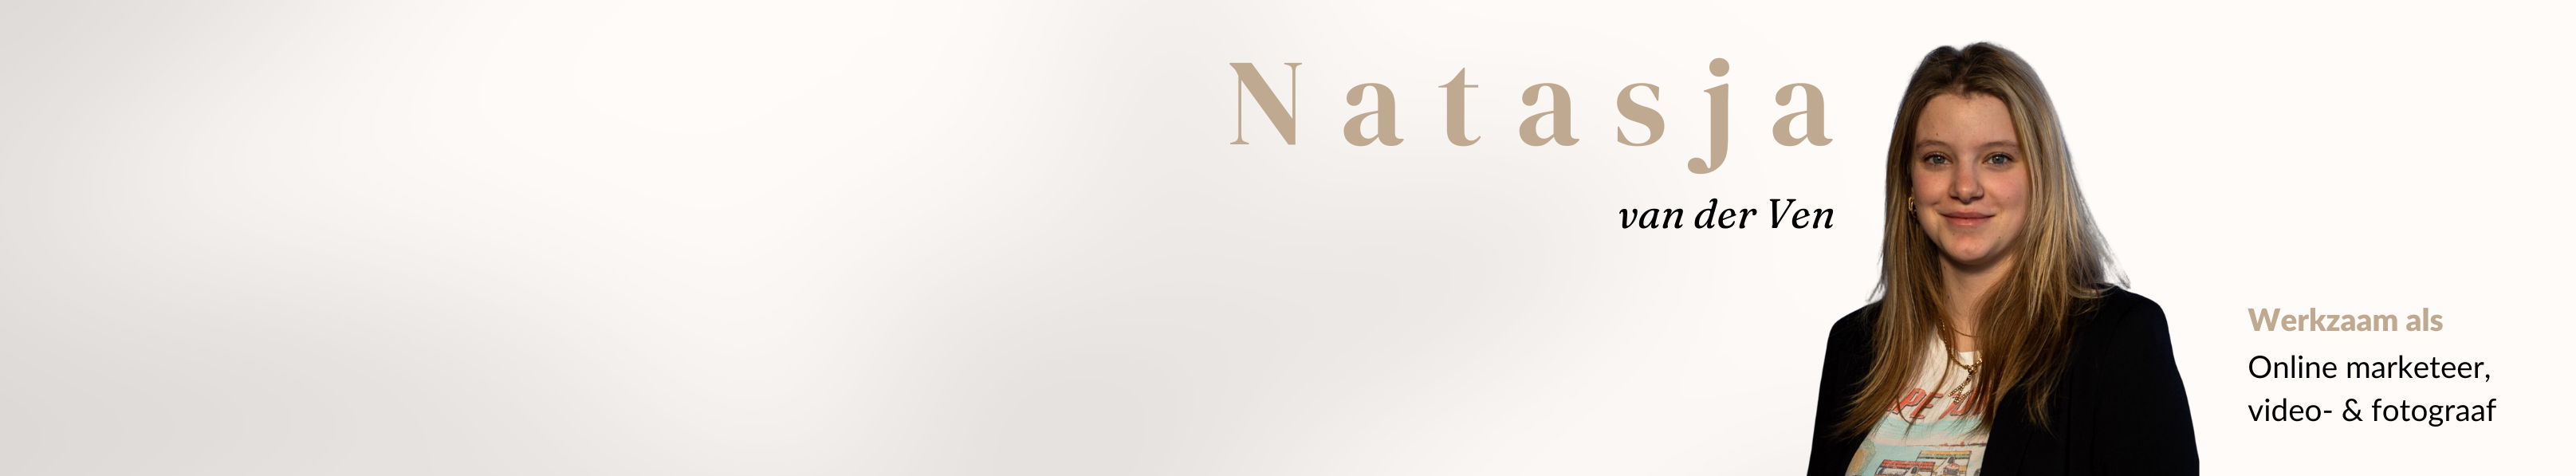 Natasja van der Ven's profile banner